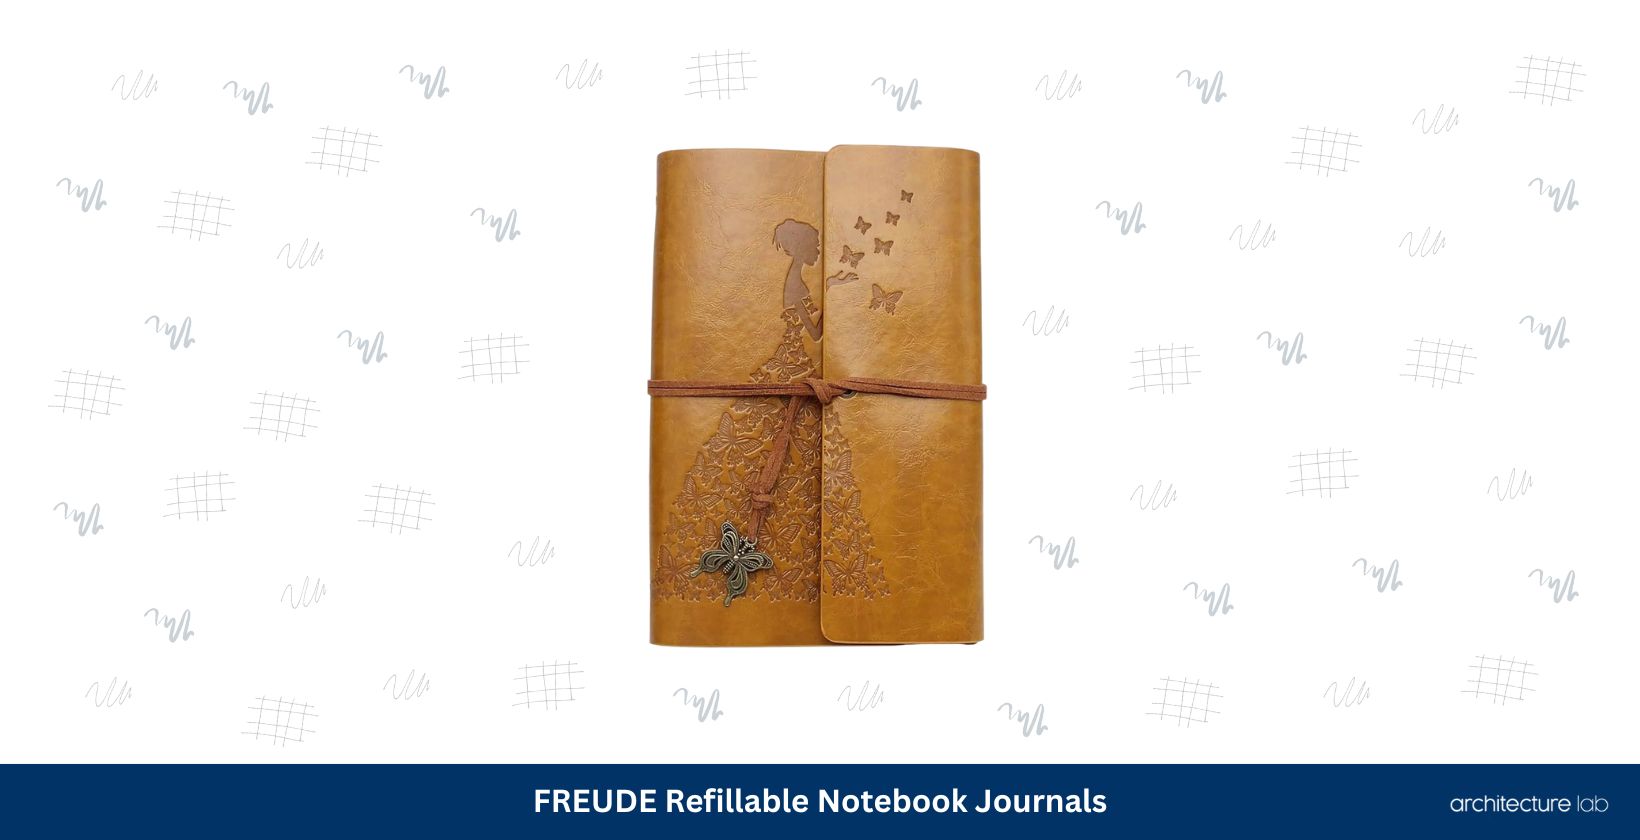 Freude refillable notebook journals